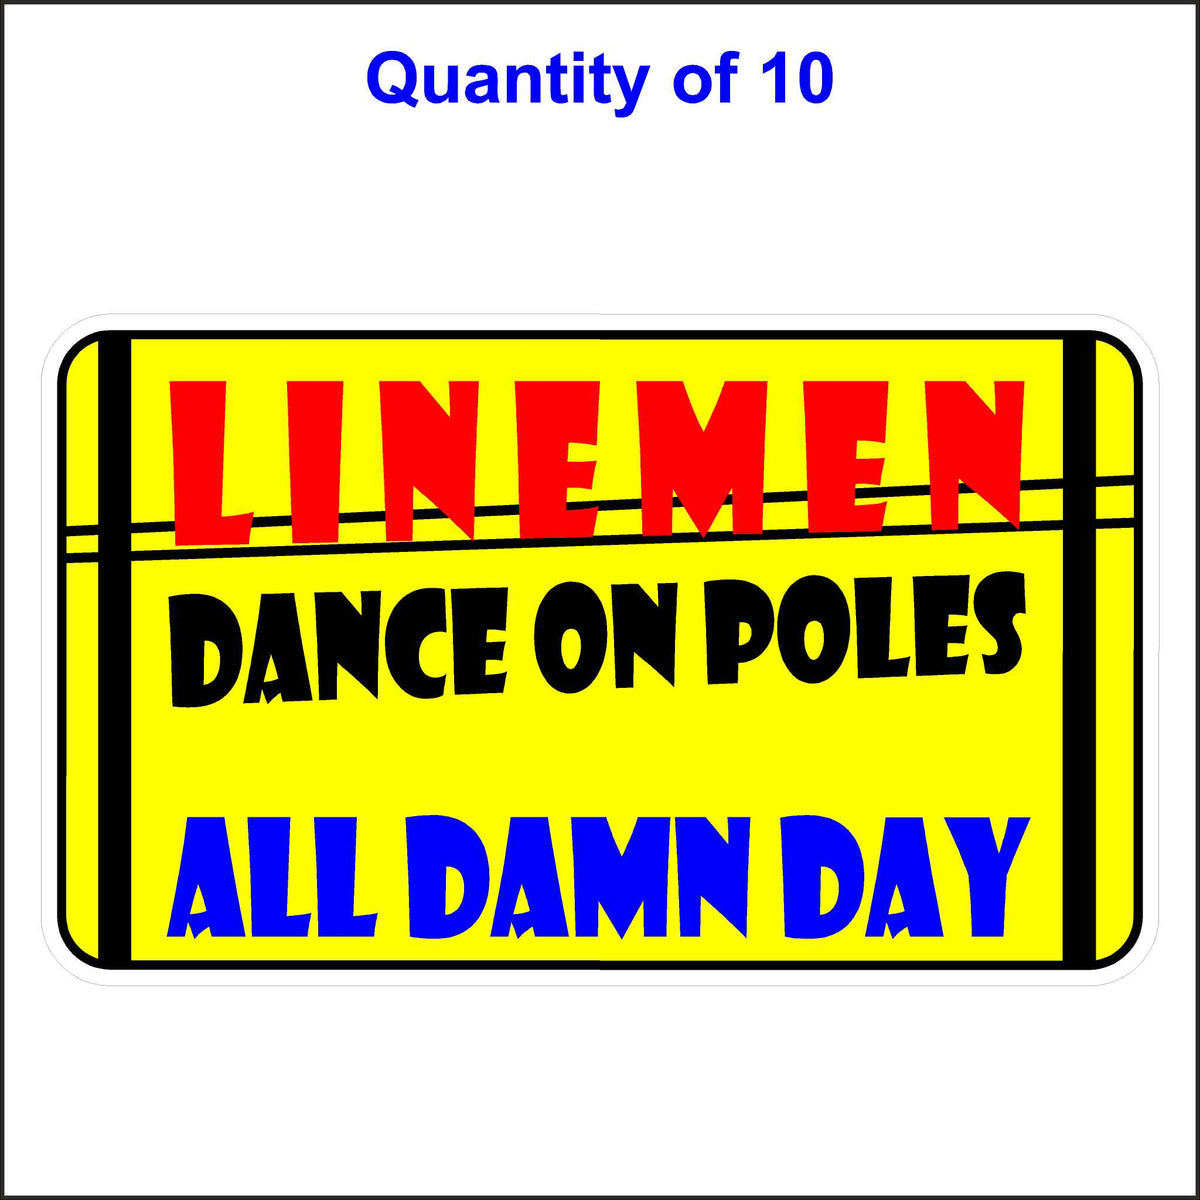 Lineman Dance on Poles All Damn Day Sticker. 10 Quantity.